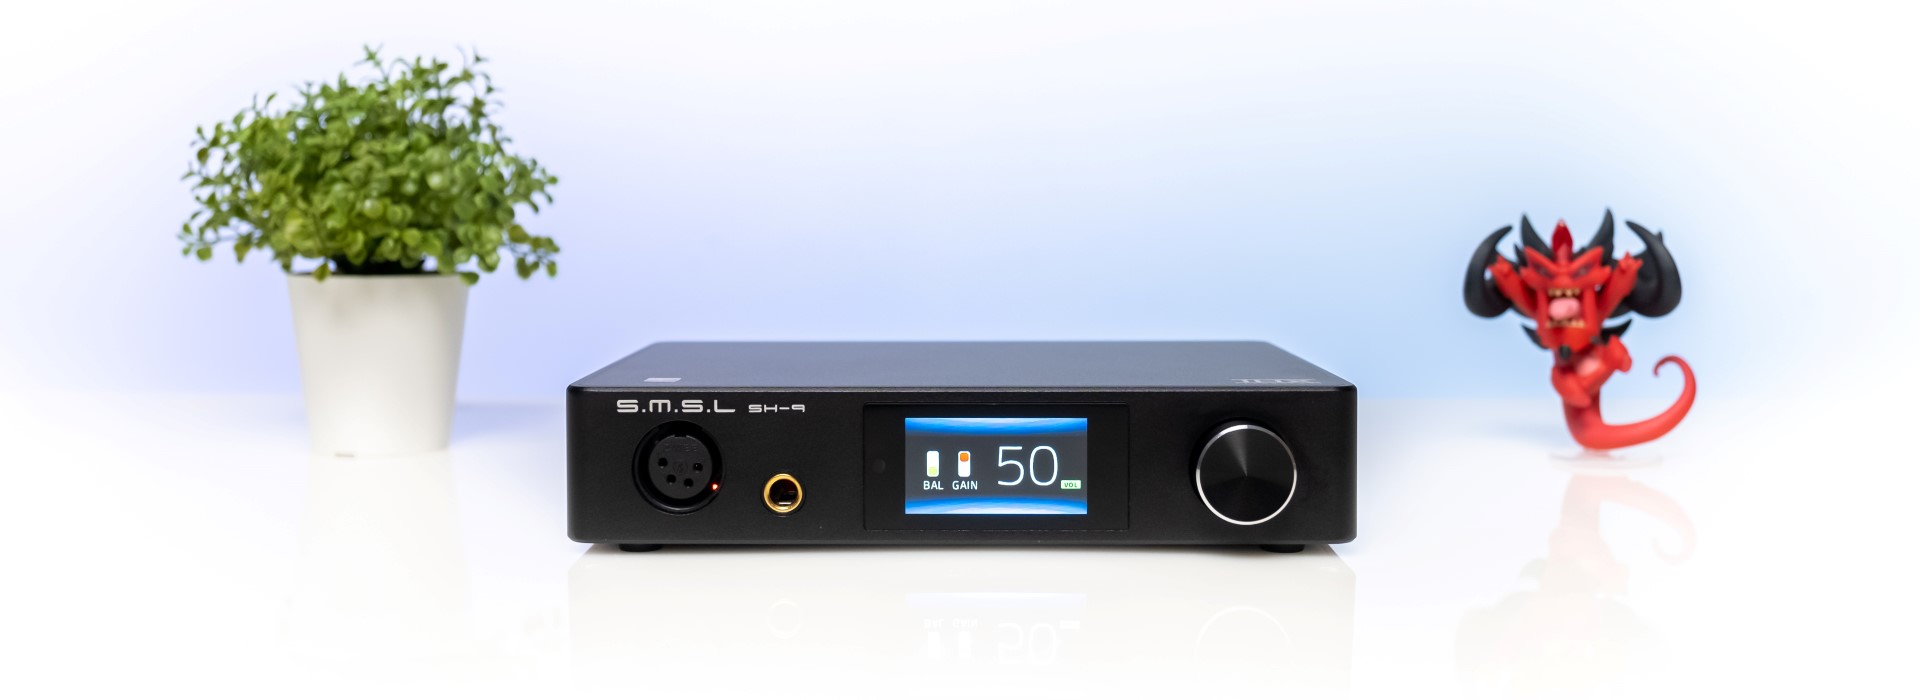 SMSL SH-9 THX-888 Headphone Amp Review - Soundnews